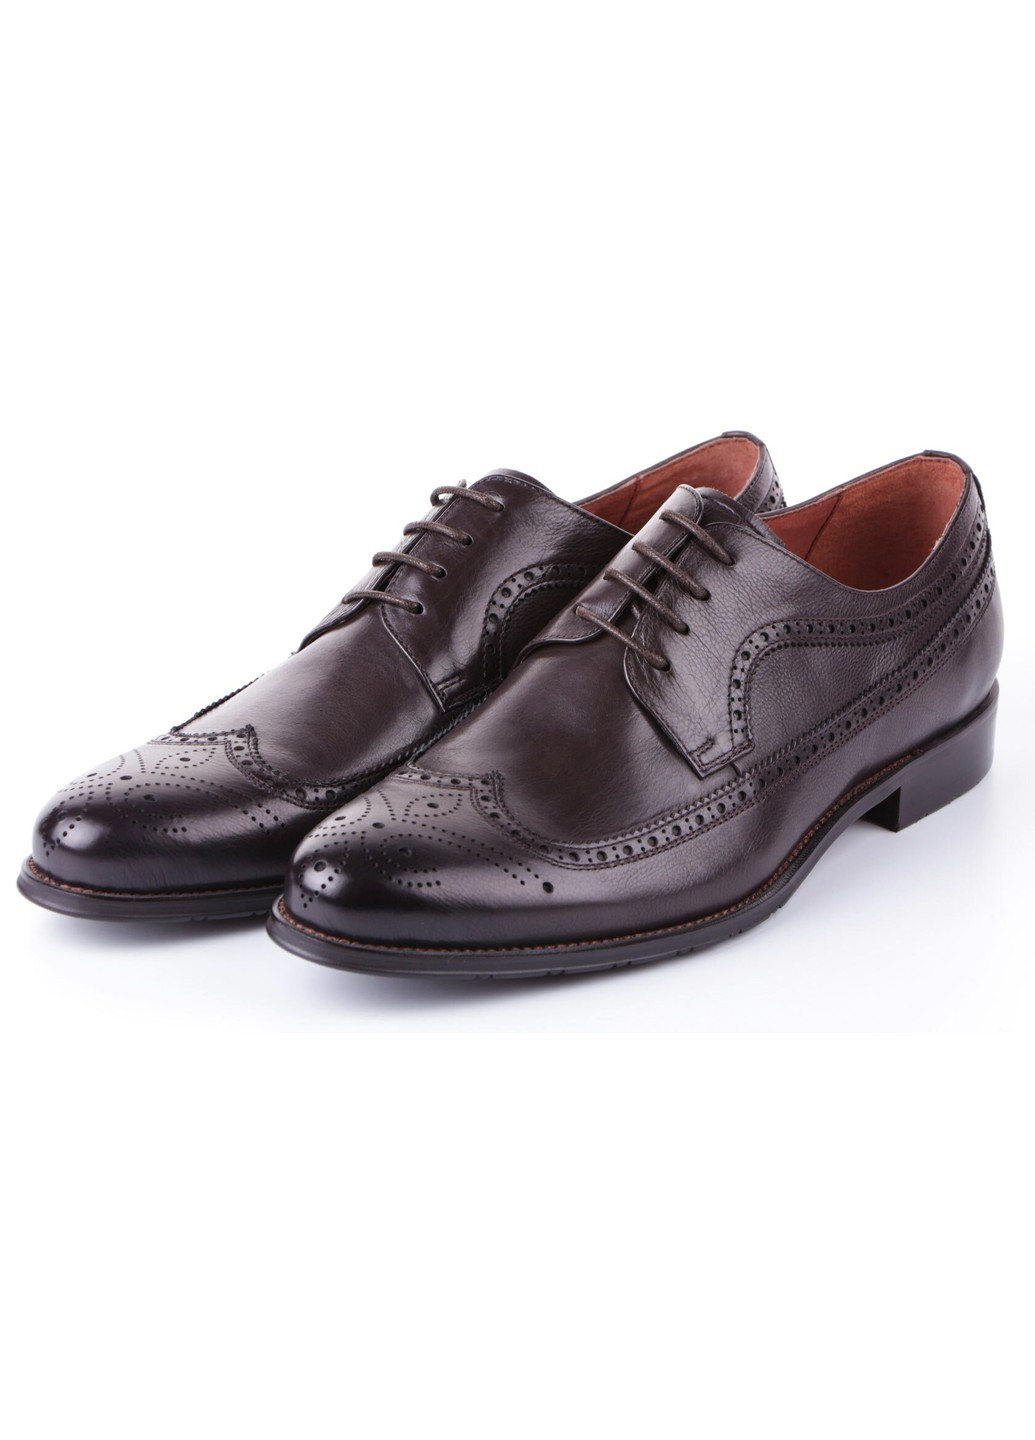 Коричневые мужские классические туфли 195104 Marco Pinotti на шнурках